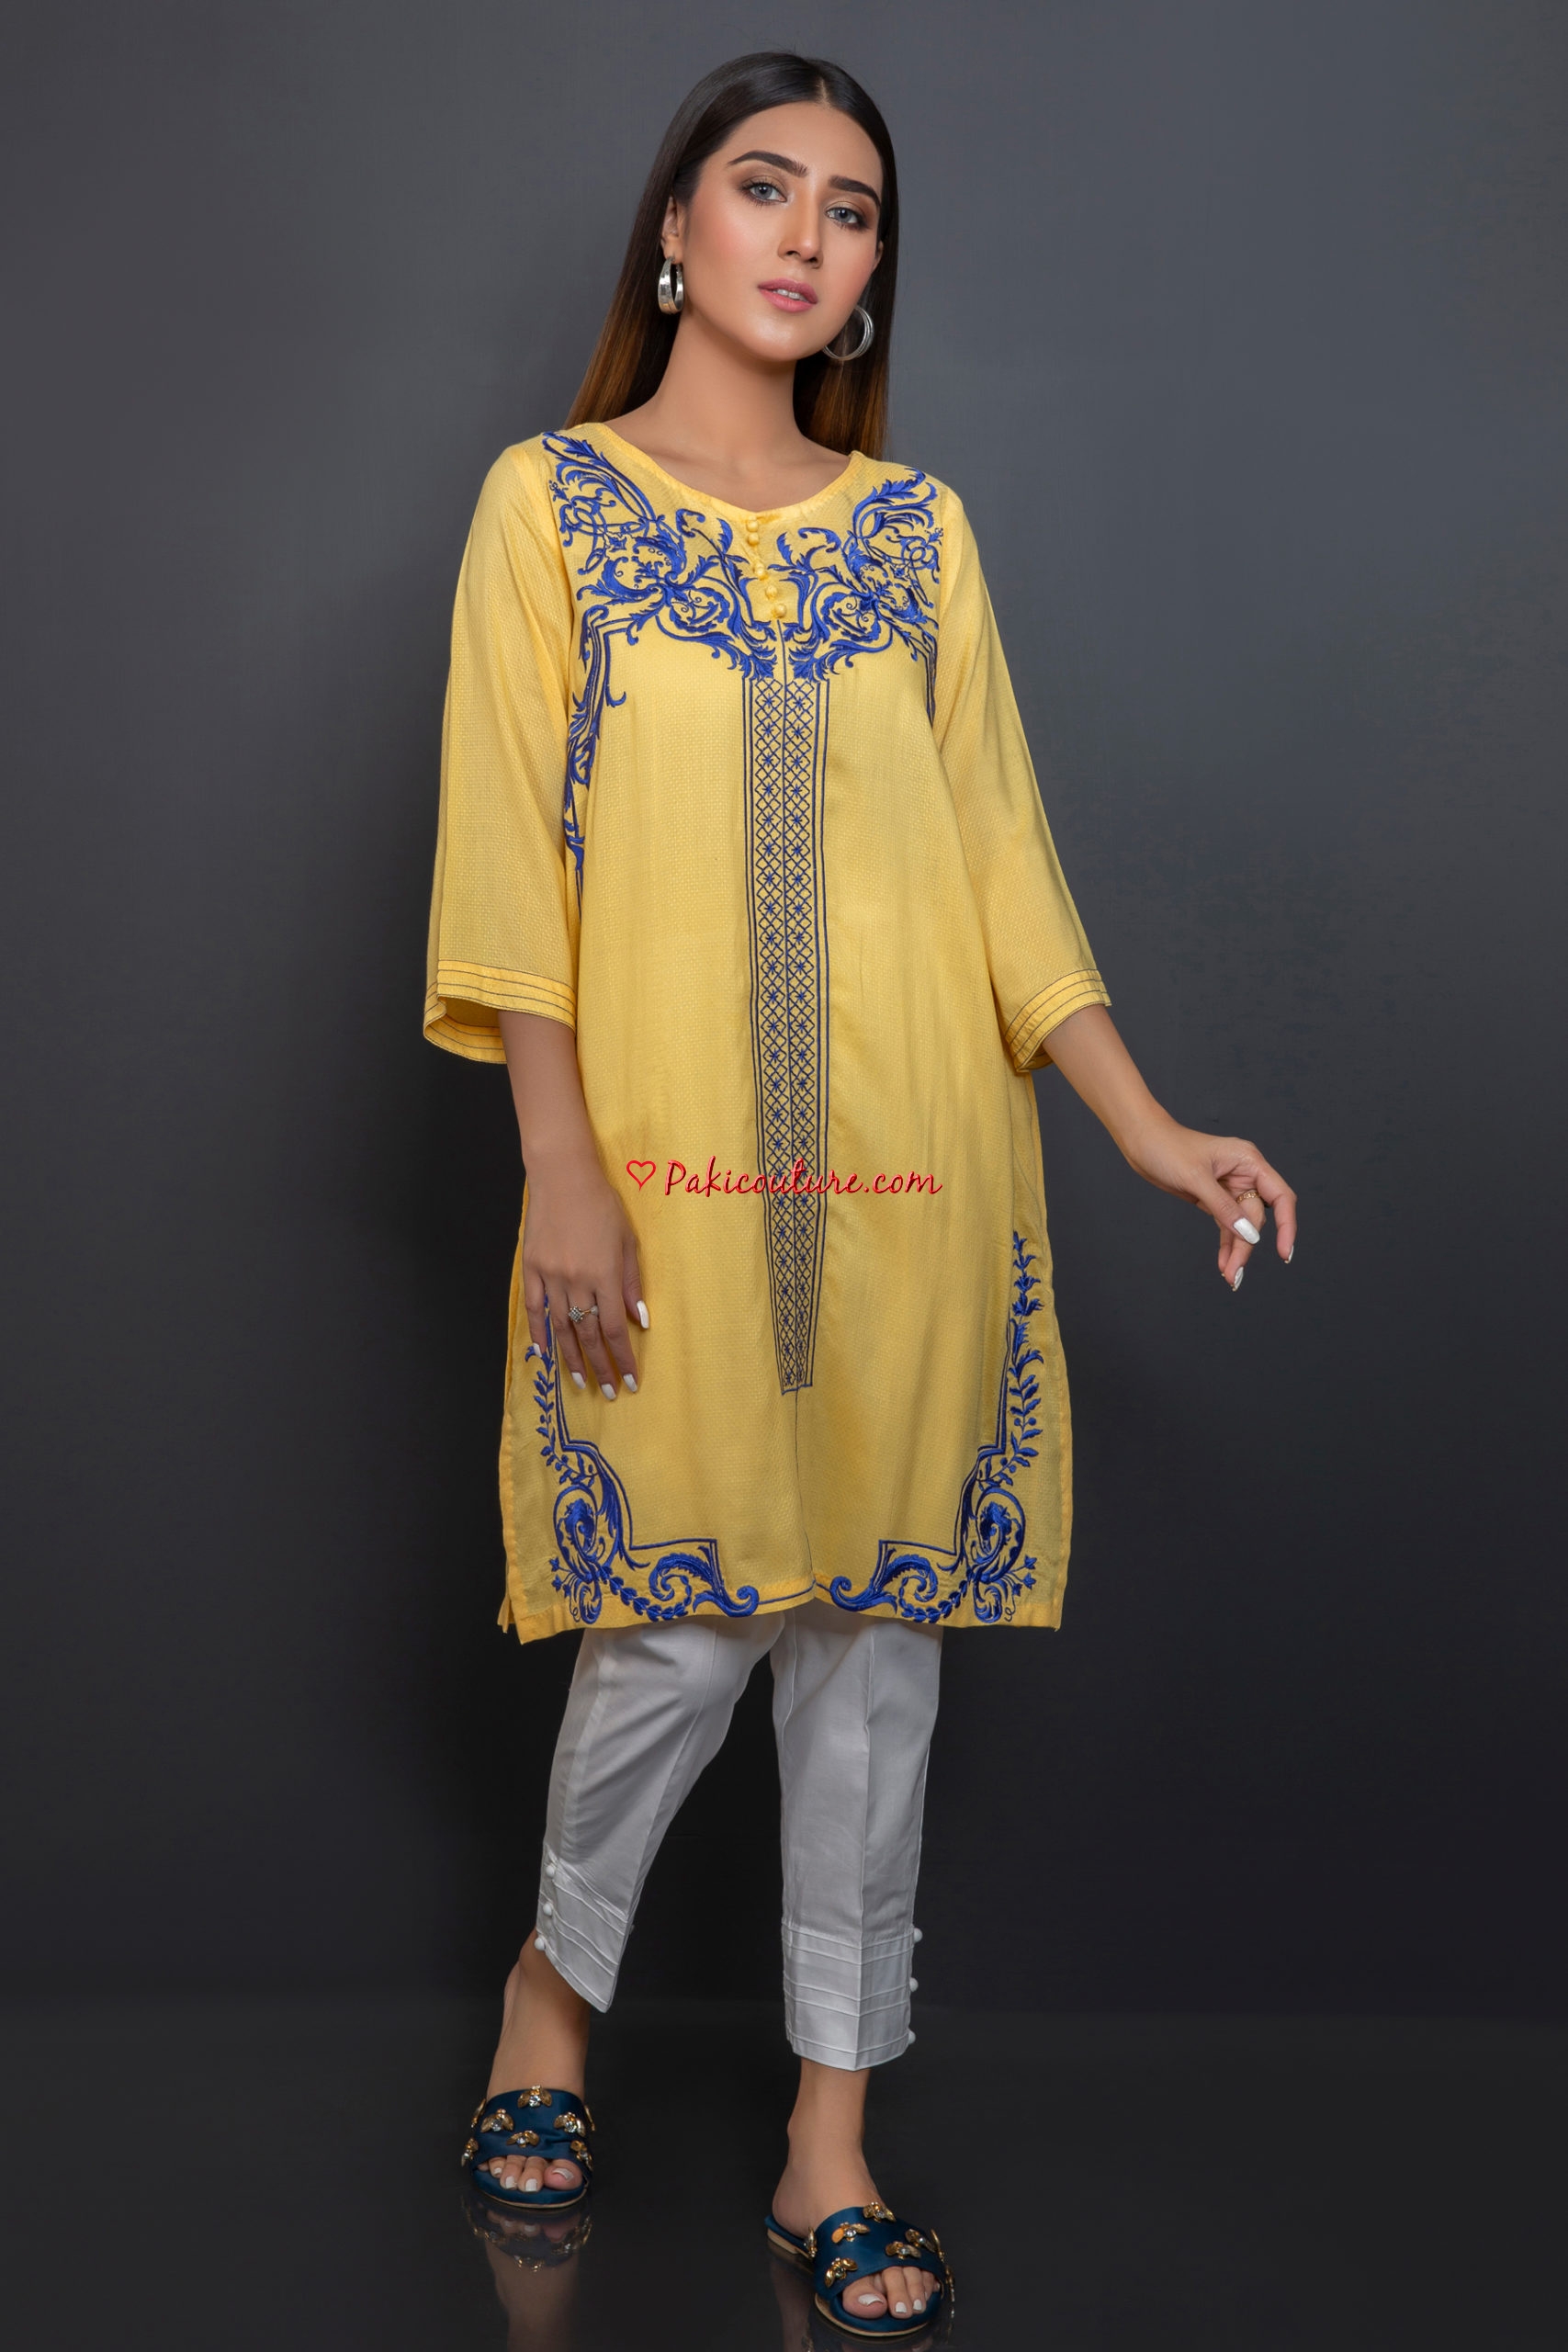 Kross Kulture RTW Collection 2020 Shop Online | Buy Pakistani Fashion ...